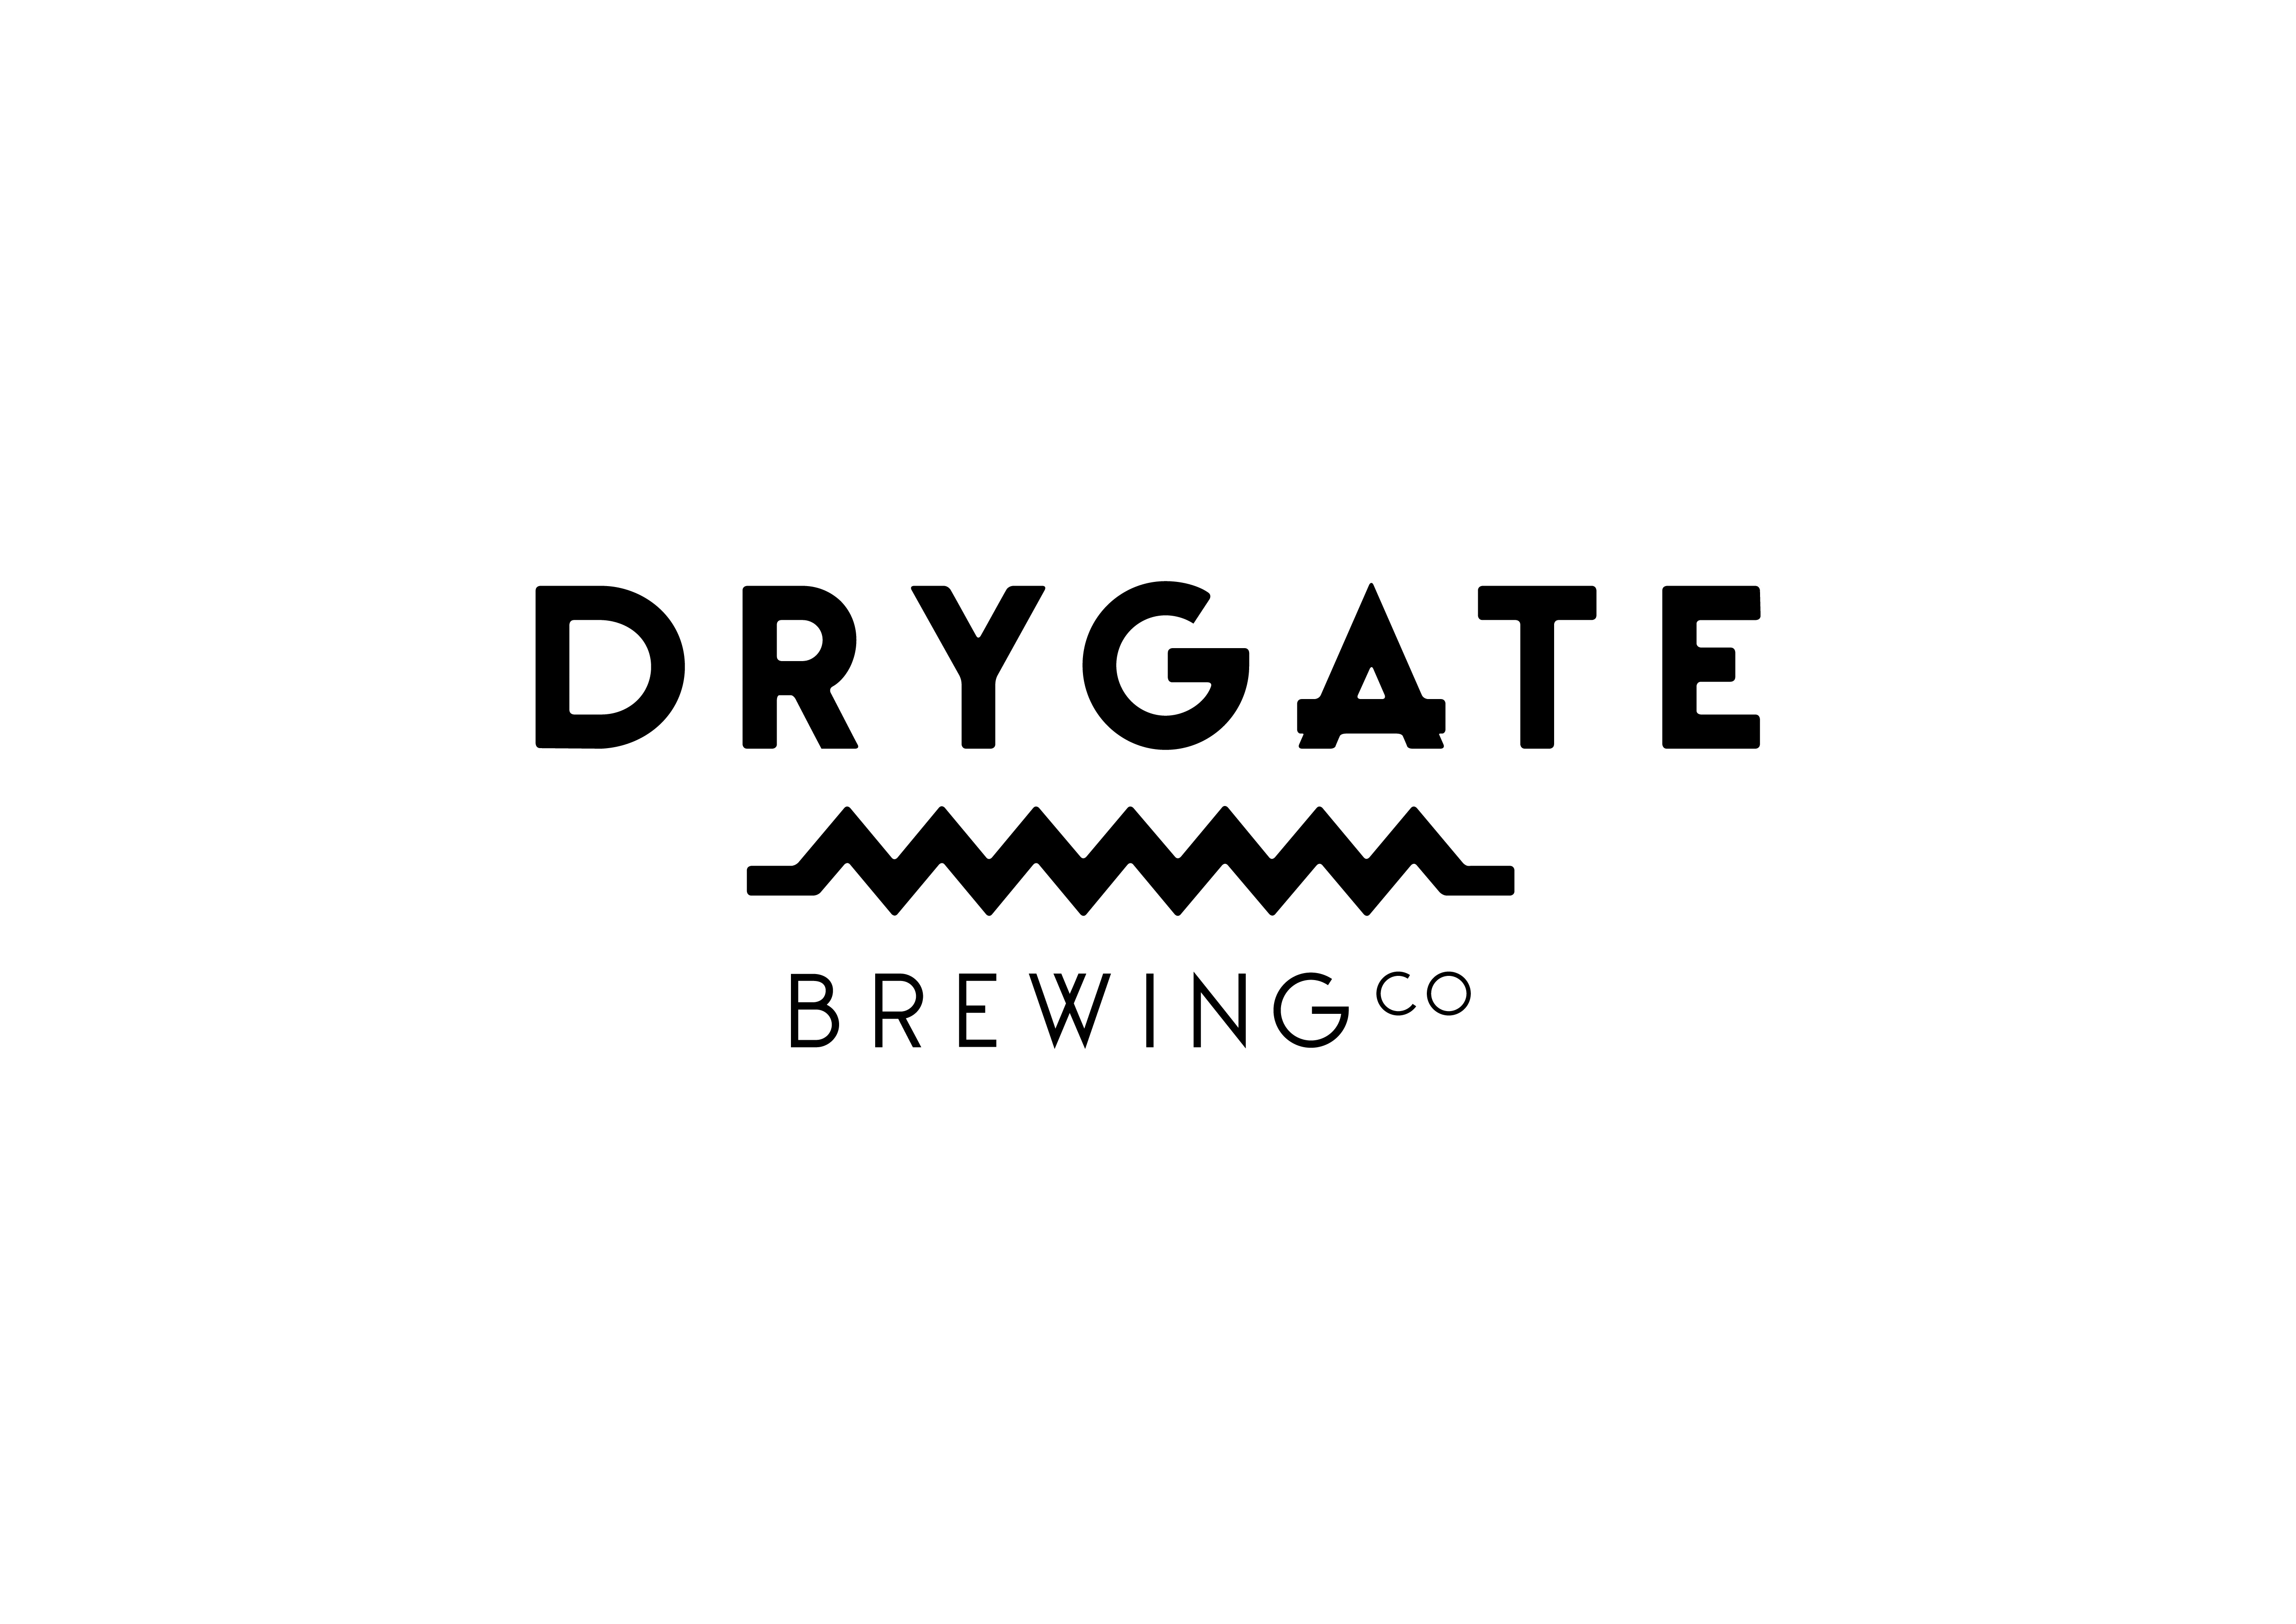 Drygate Brewing Company Ltd